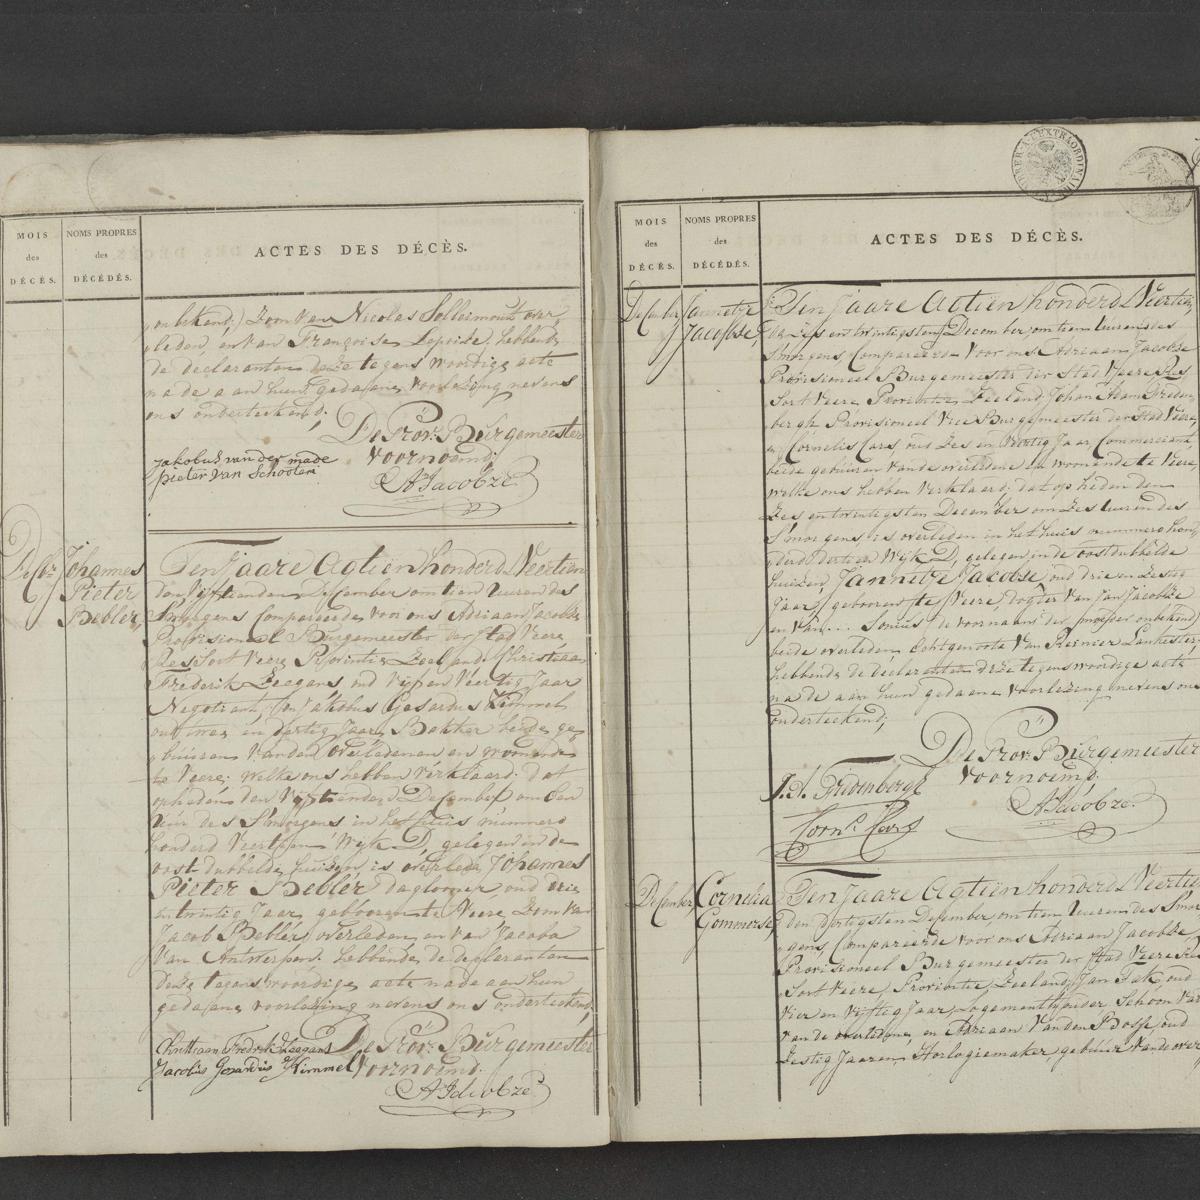 Civil registry of deaths, Veere, 1814, records 323-326